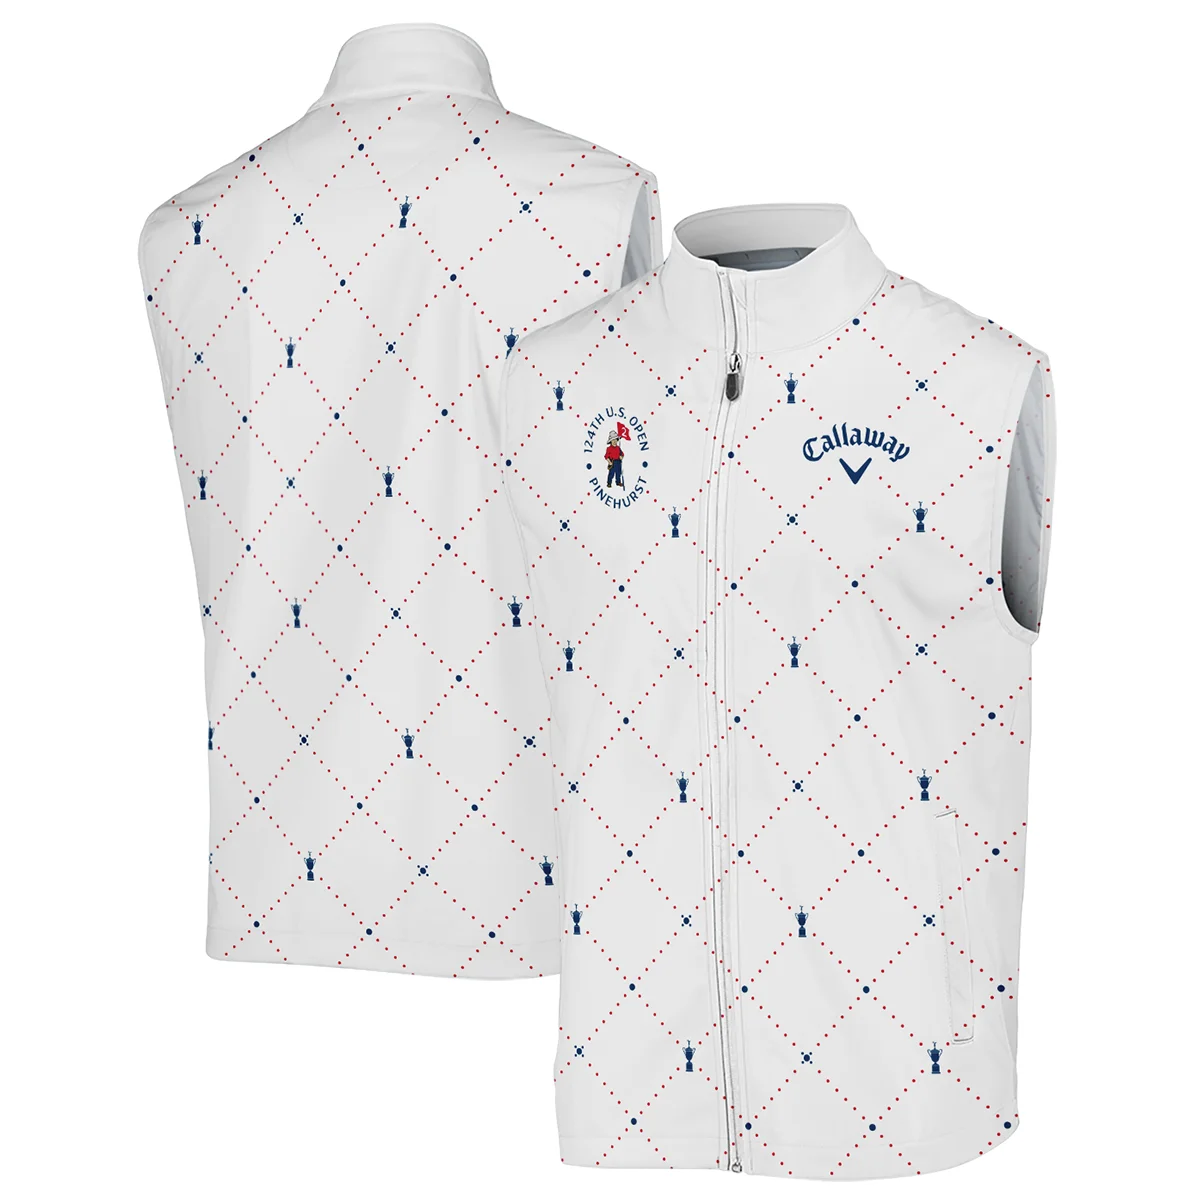 Argyle Pattern With Cup 124th U.S. Open Pinehurst Callaway Sleeveless Jacket Style Classic Sleeveless Jacket